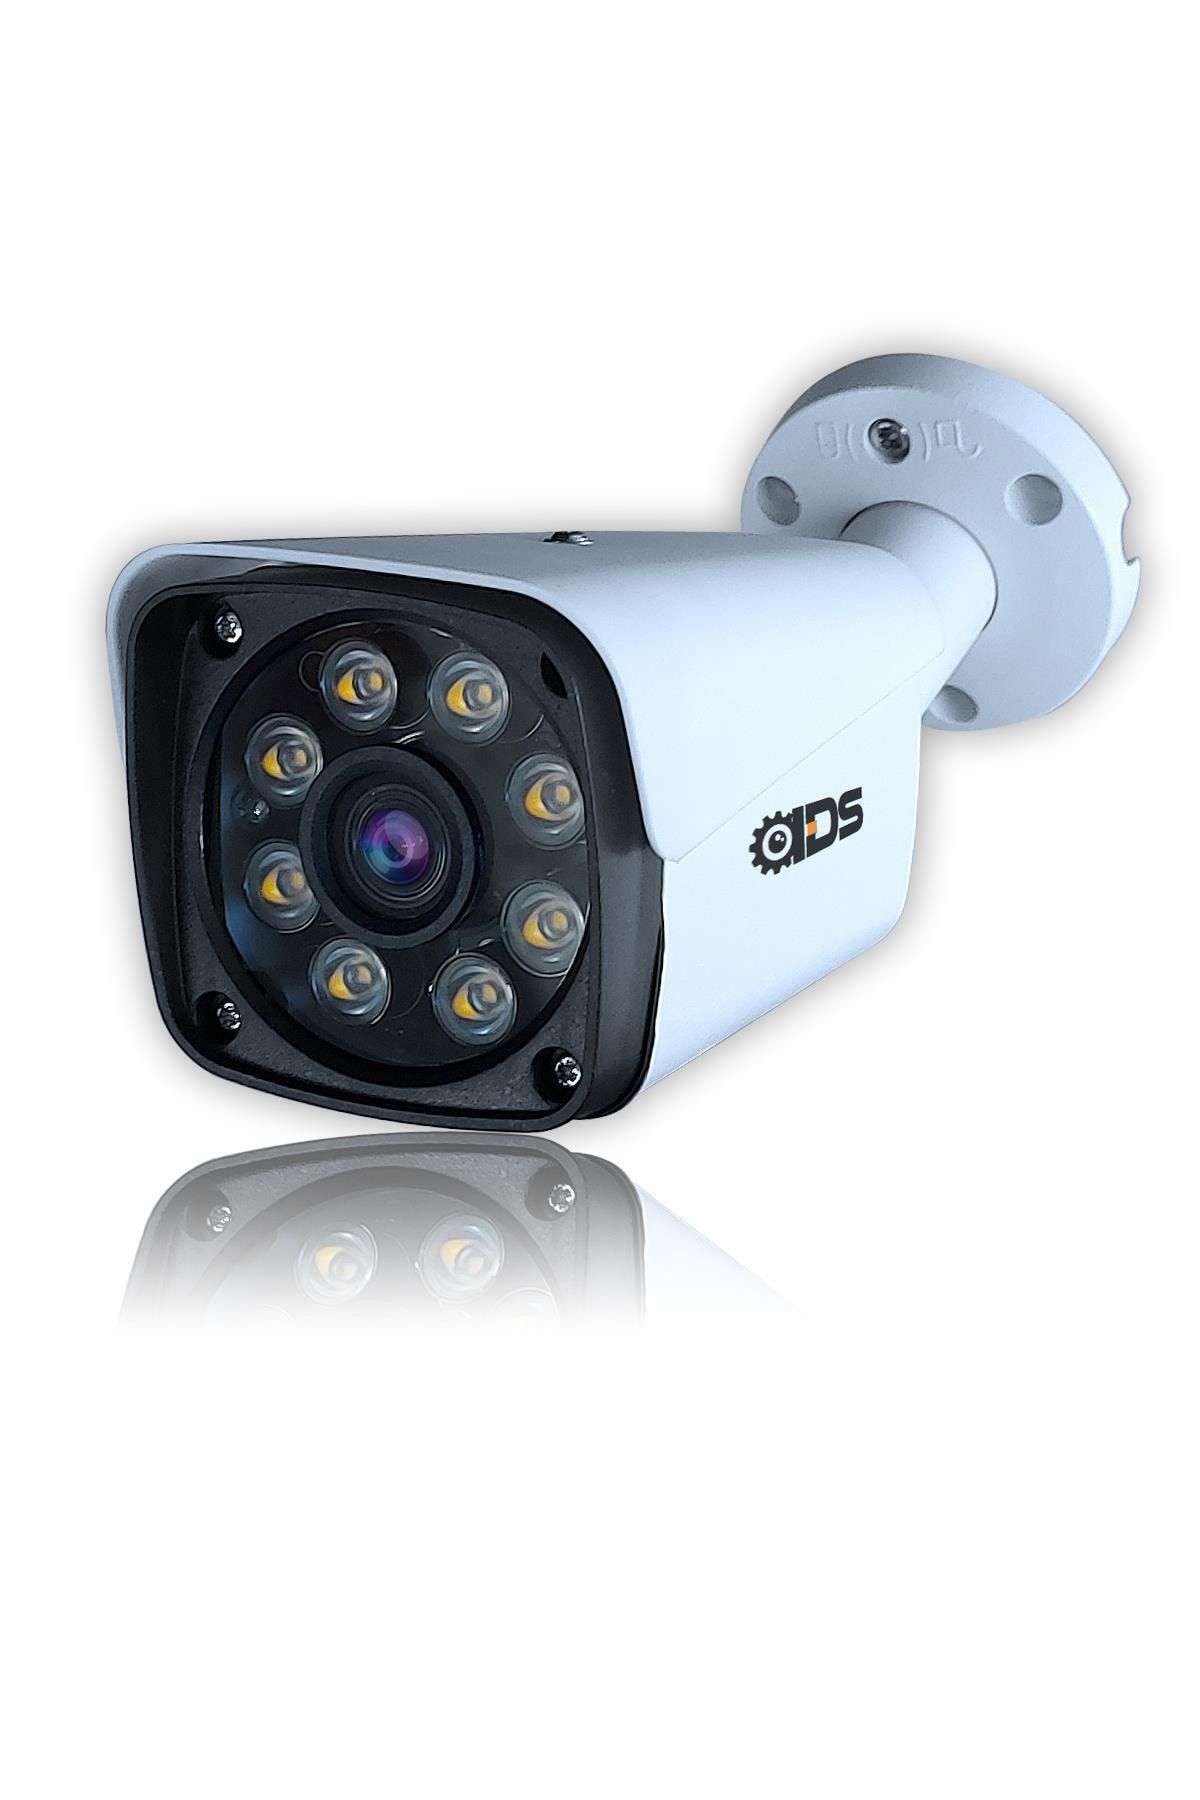 IDS - Gece Renkli - 5mp Lens 1080p Fullhd Ahd Güvenlik Kamerası - 8xultra Led - Metal Kasa